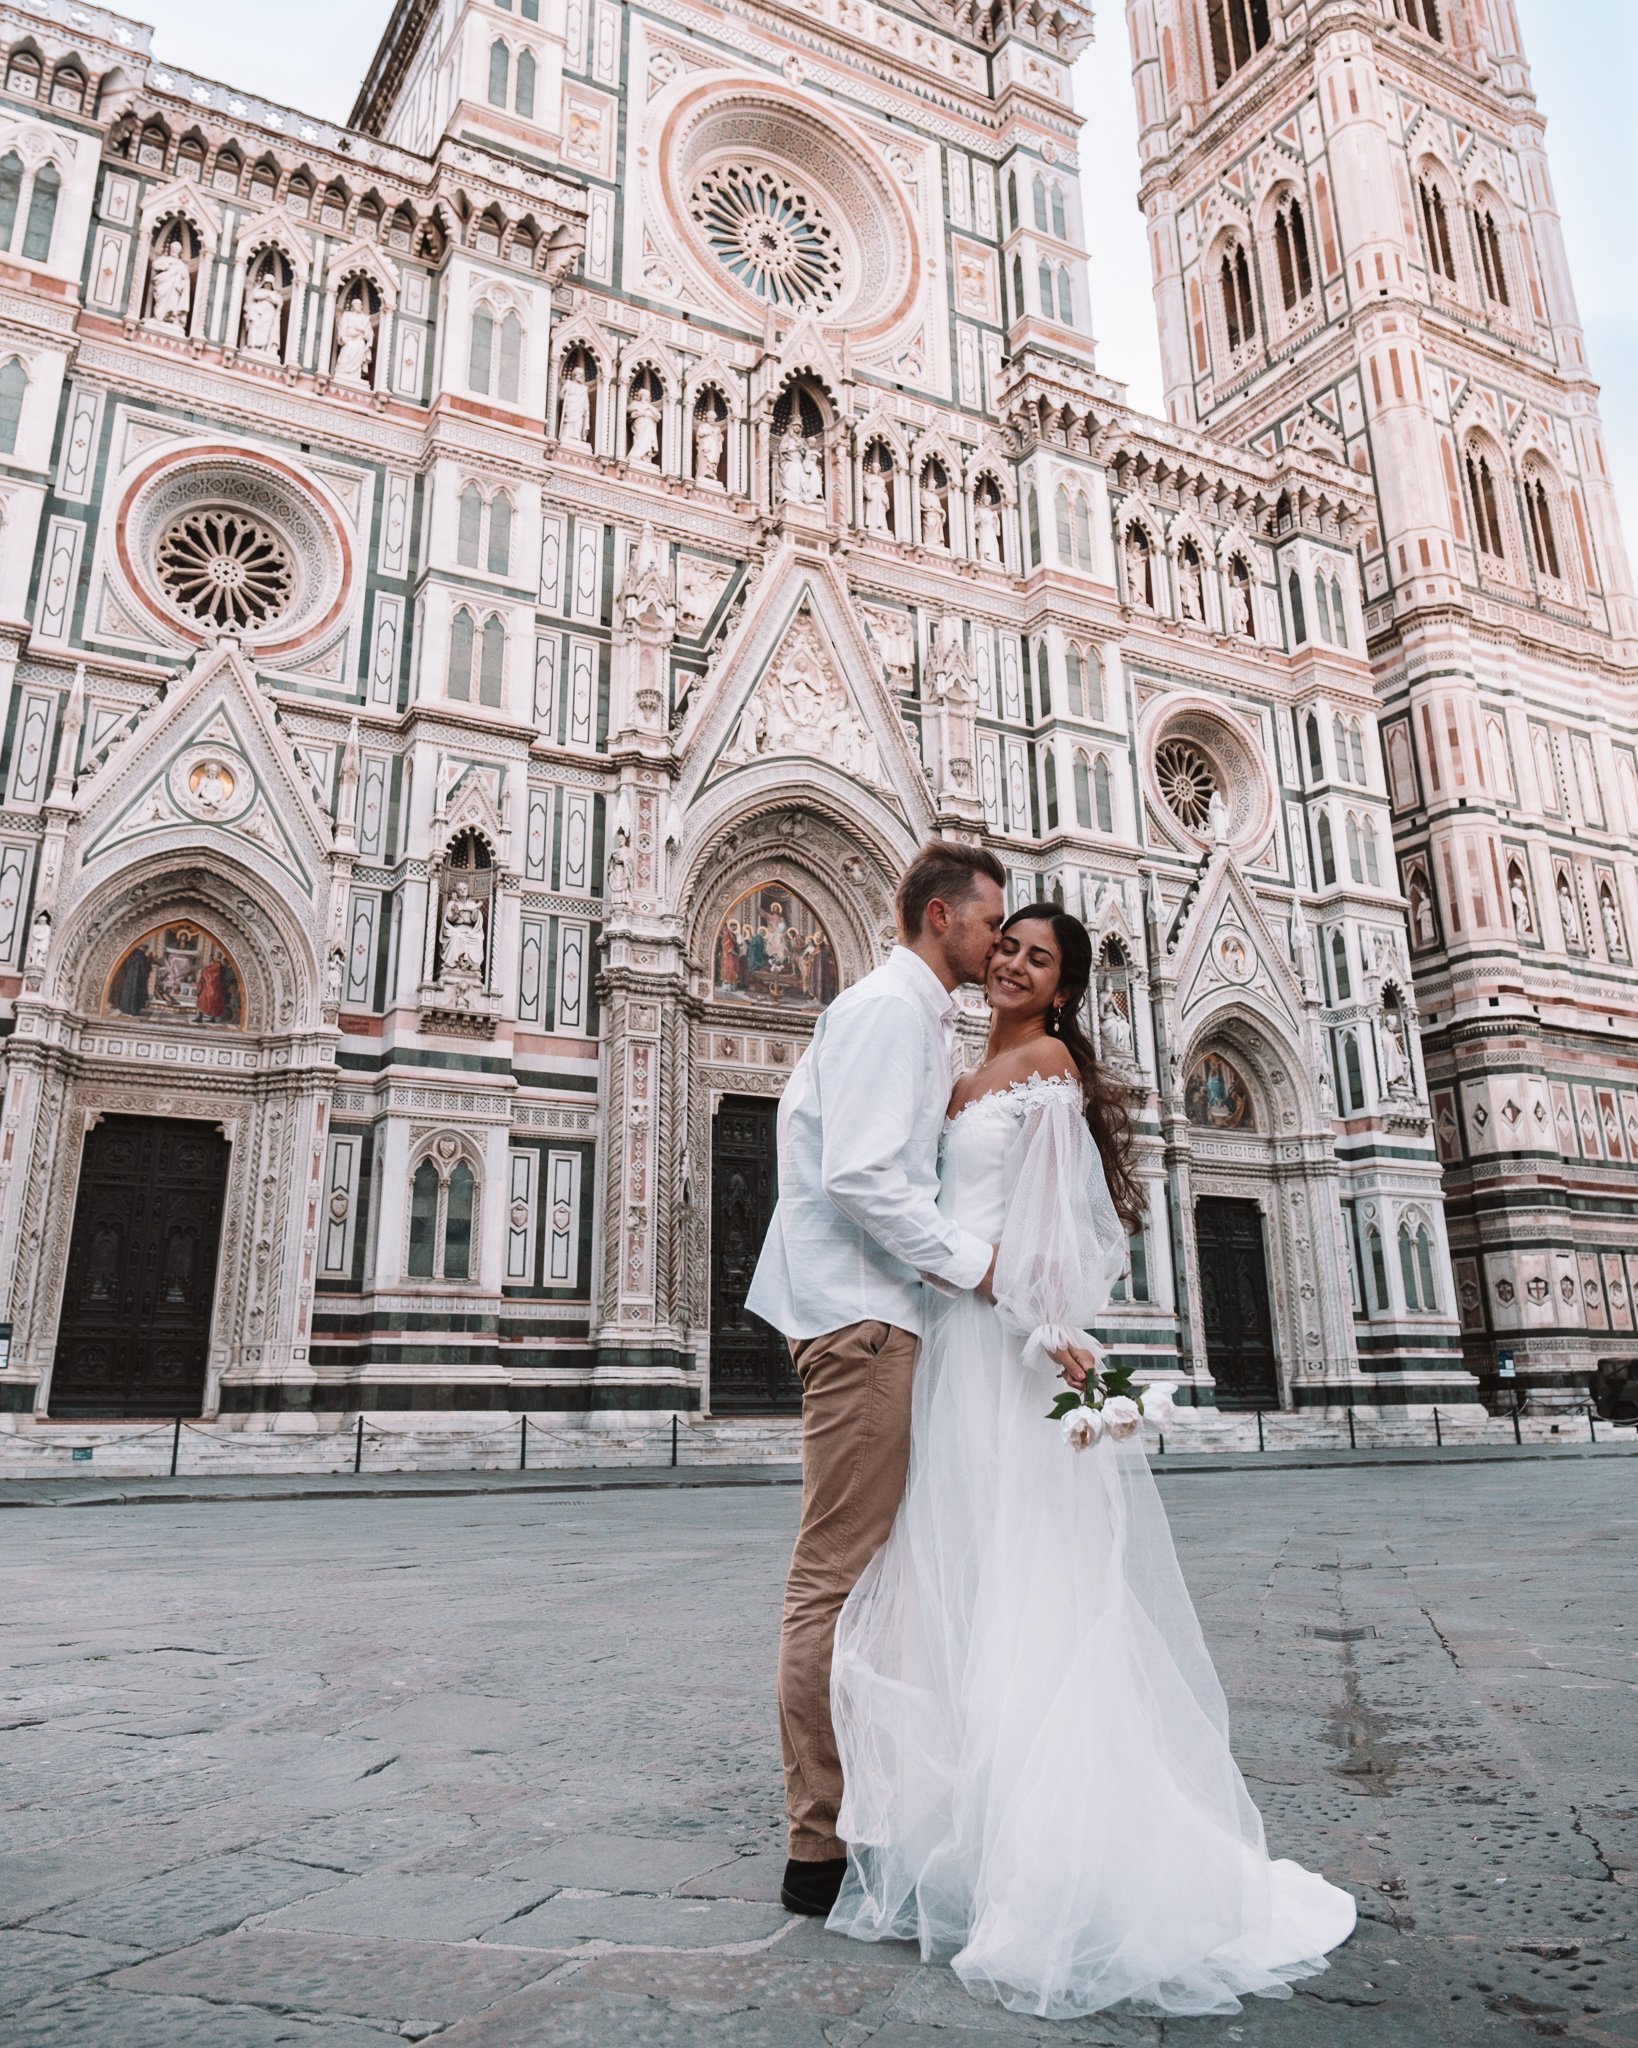 Wedding Dress Photoshoot In El Duomo Florence Firenze